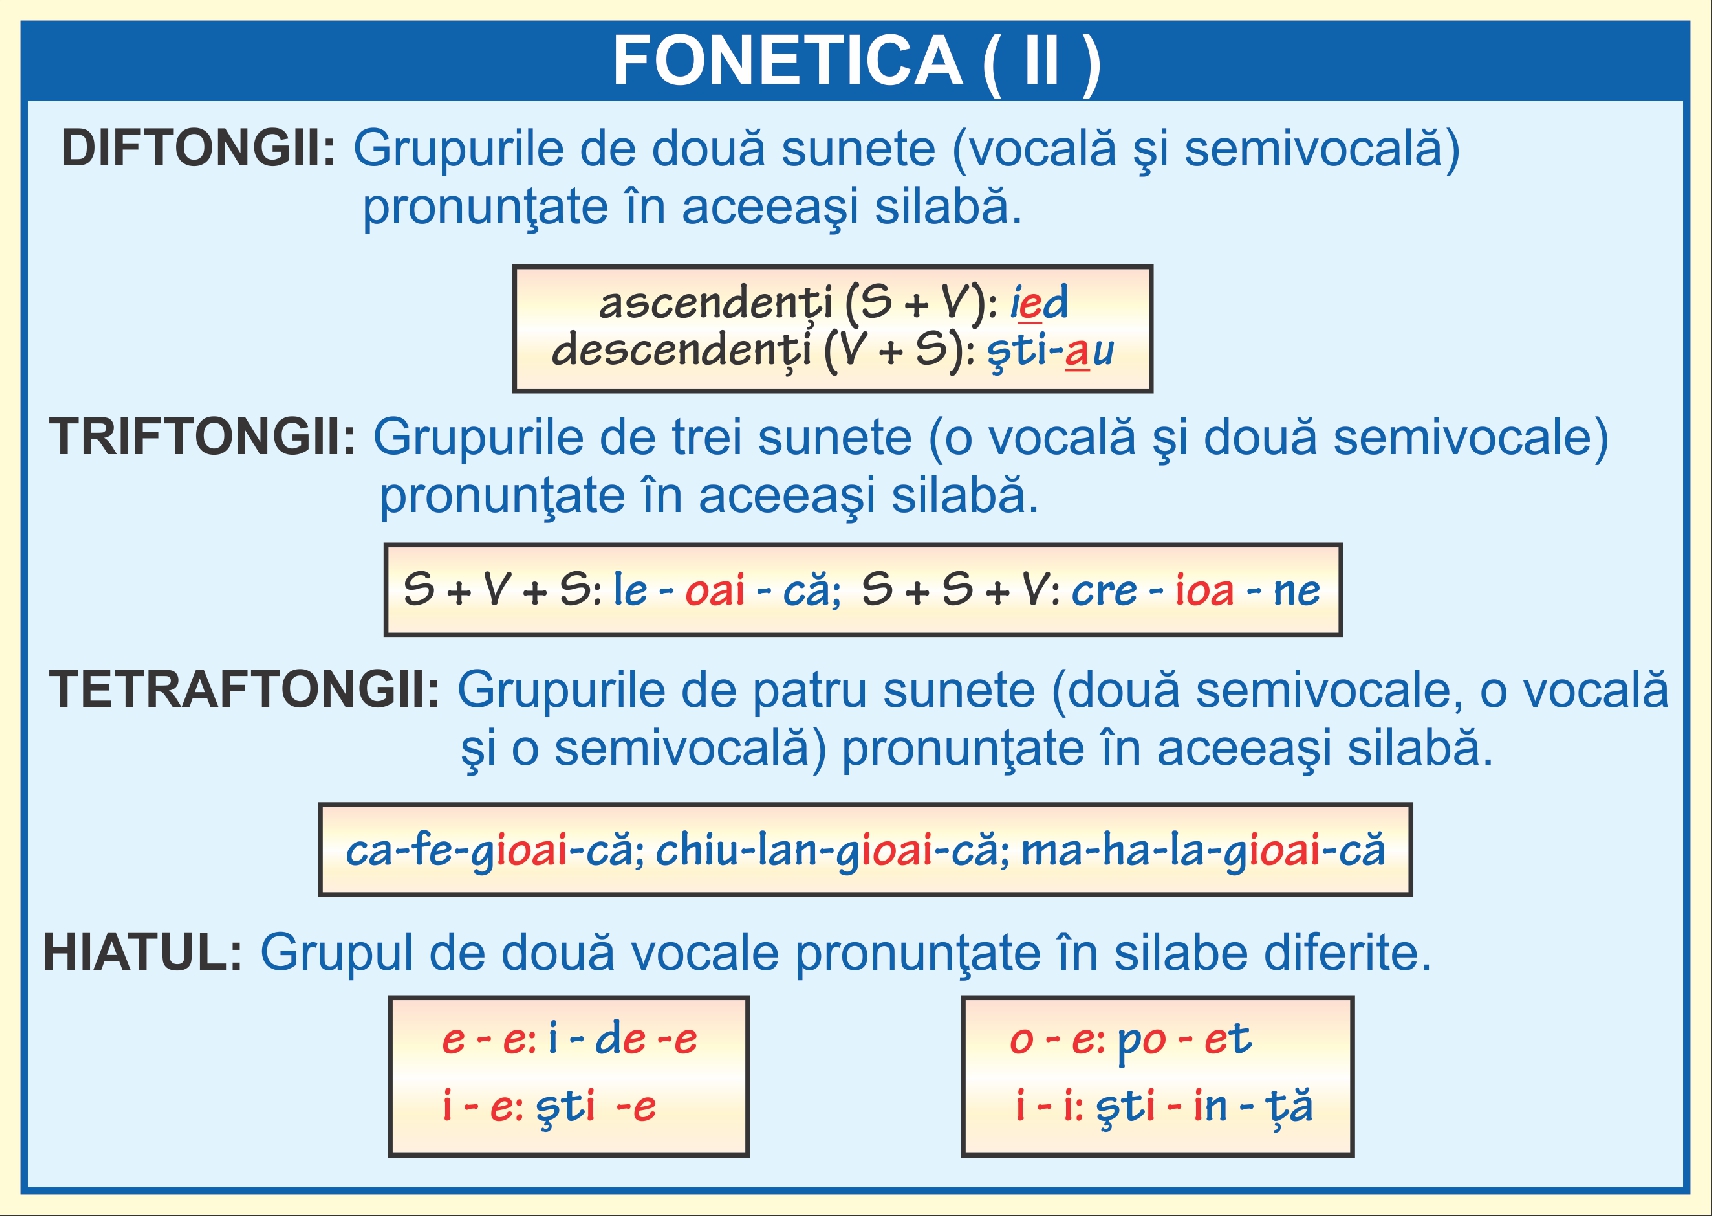 Fonetica - II